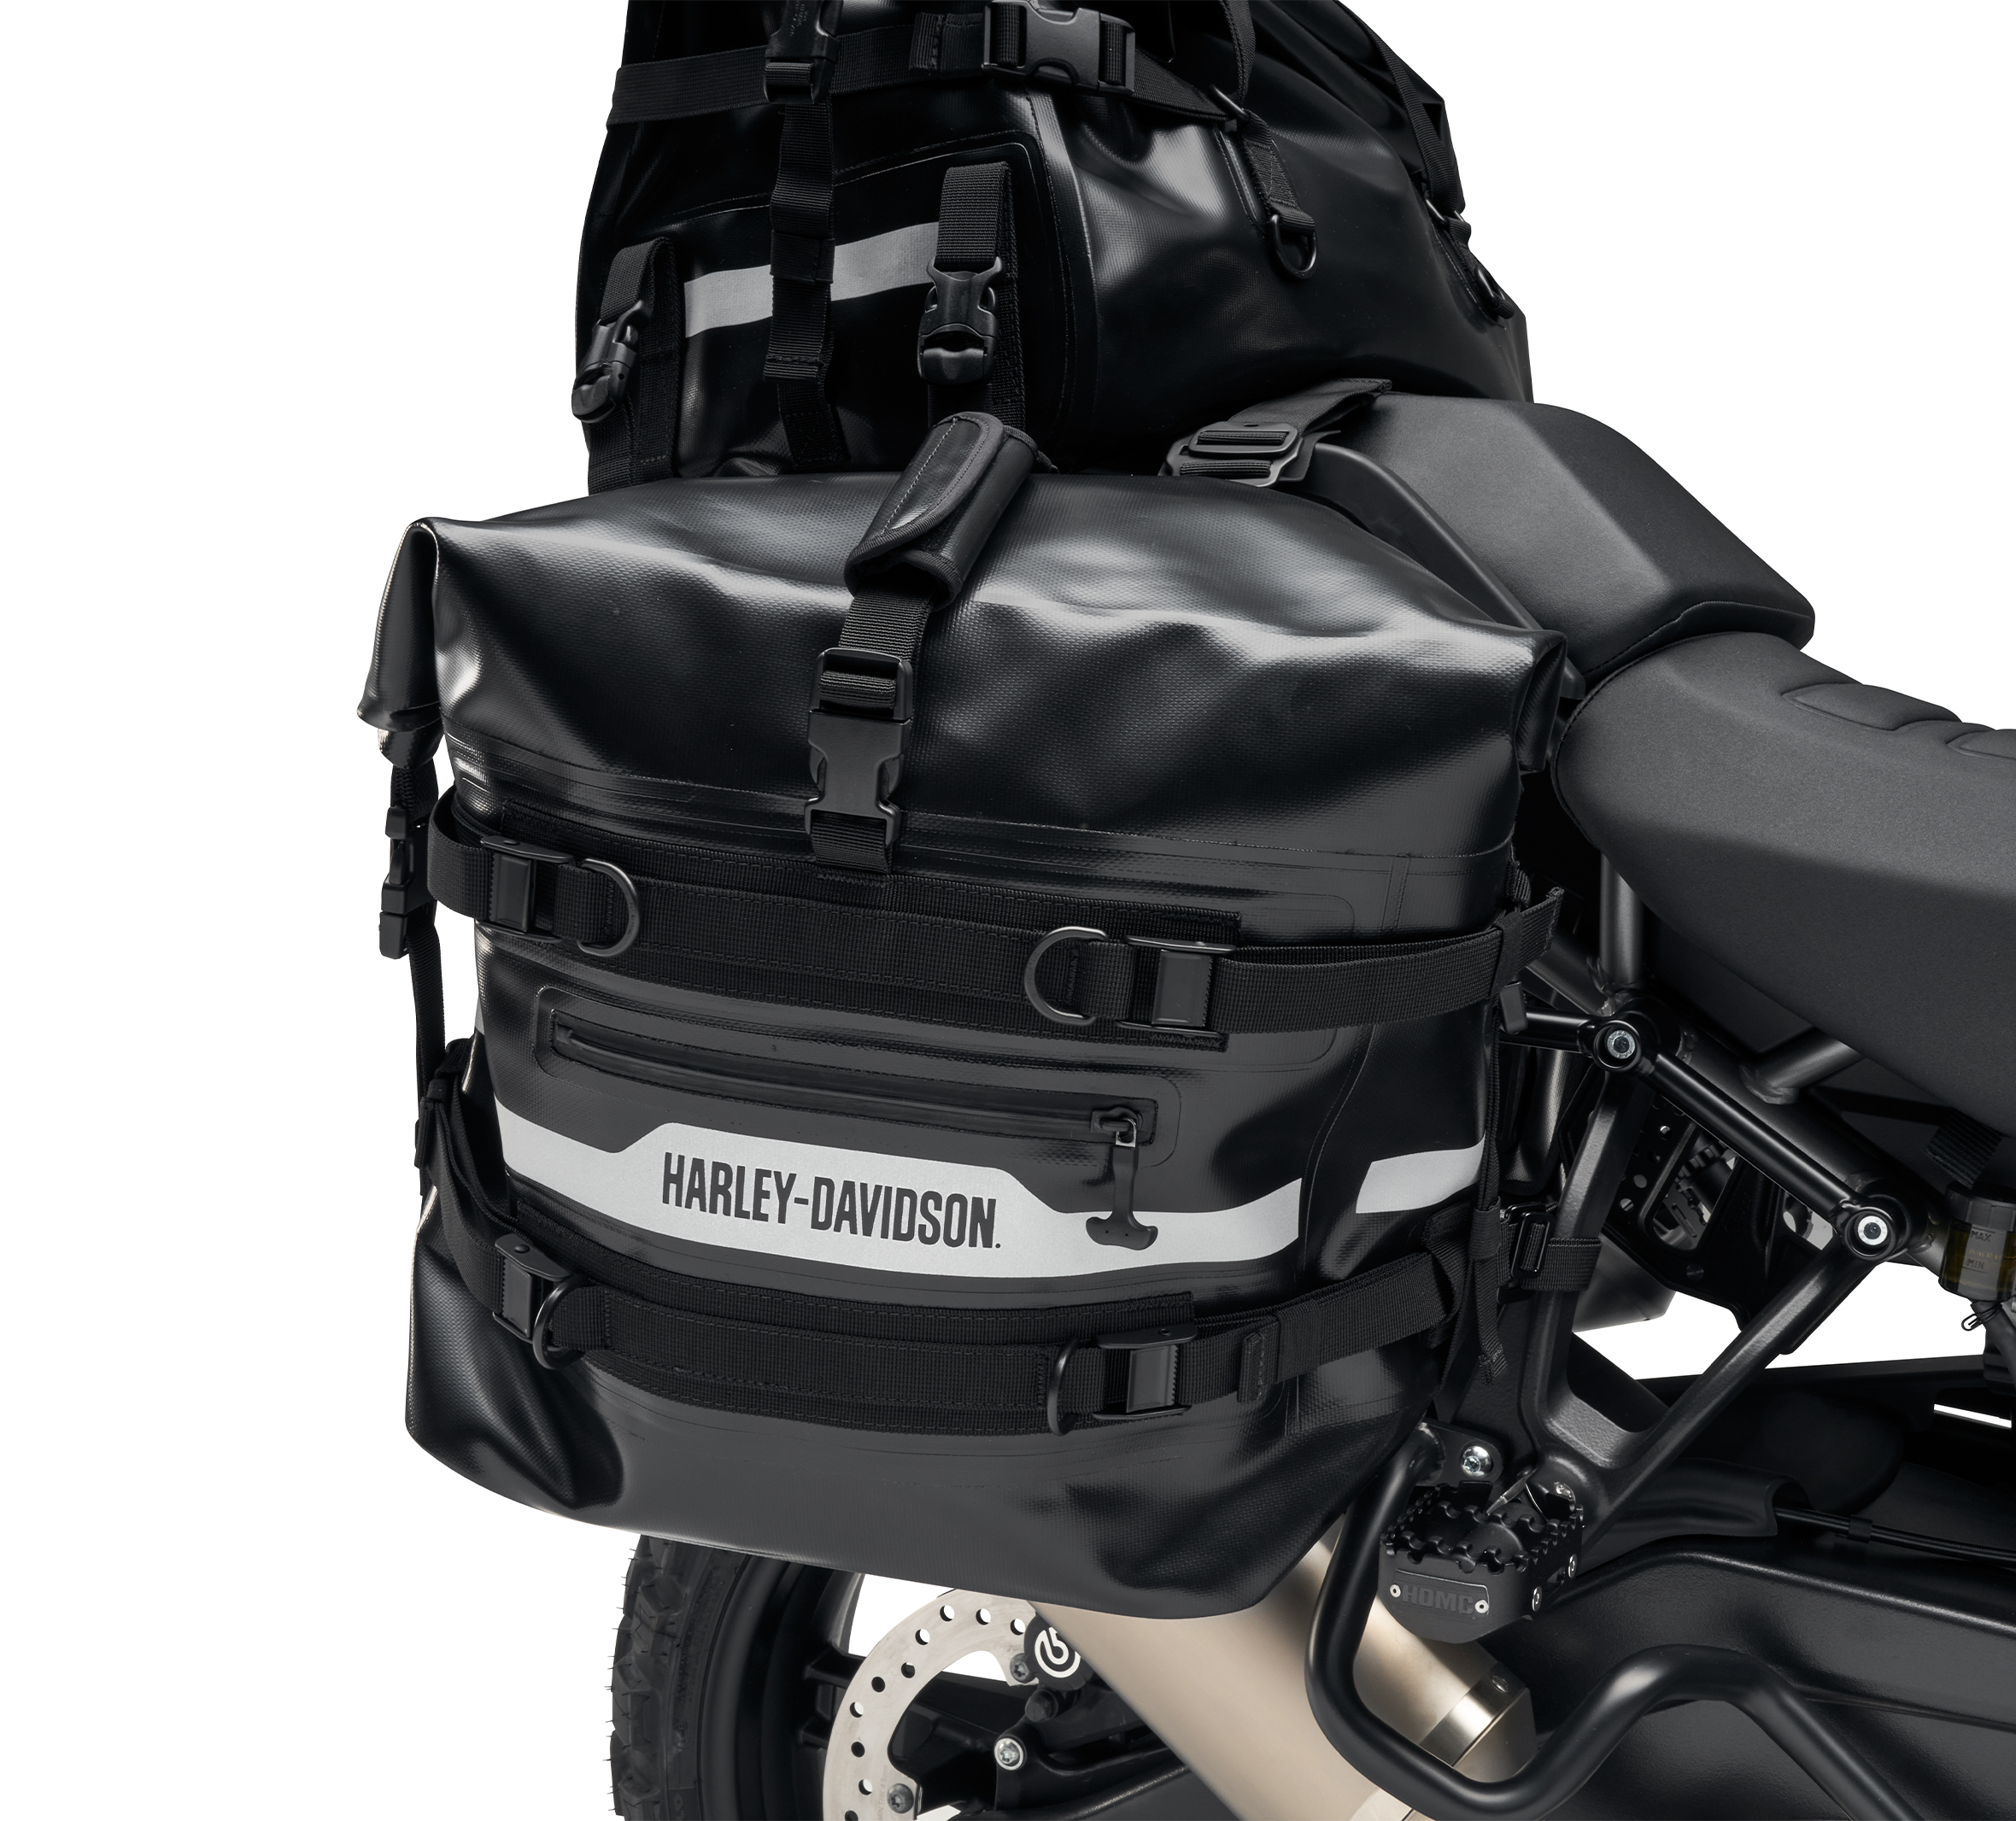 Harley Davidson Motorcycles Genuine Leather Black Backpack Purse 11 x 11